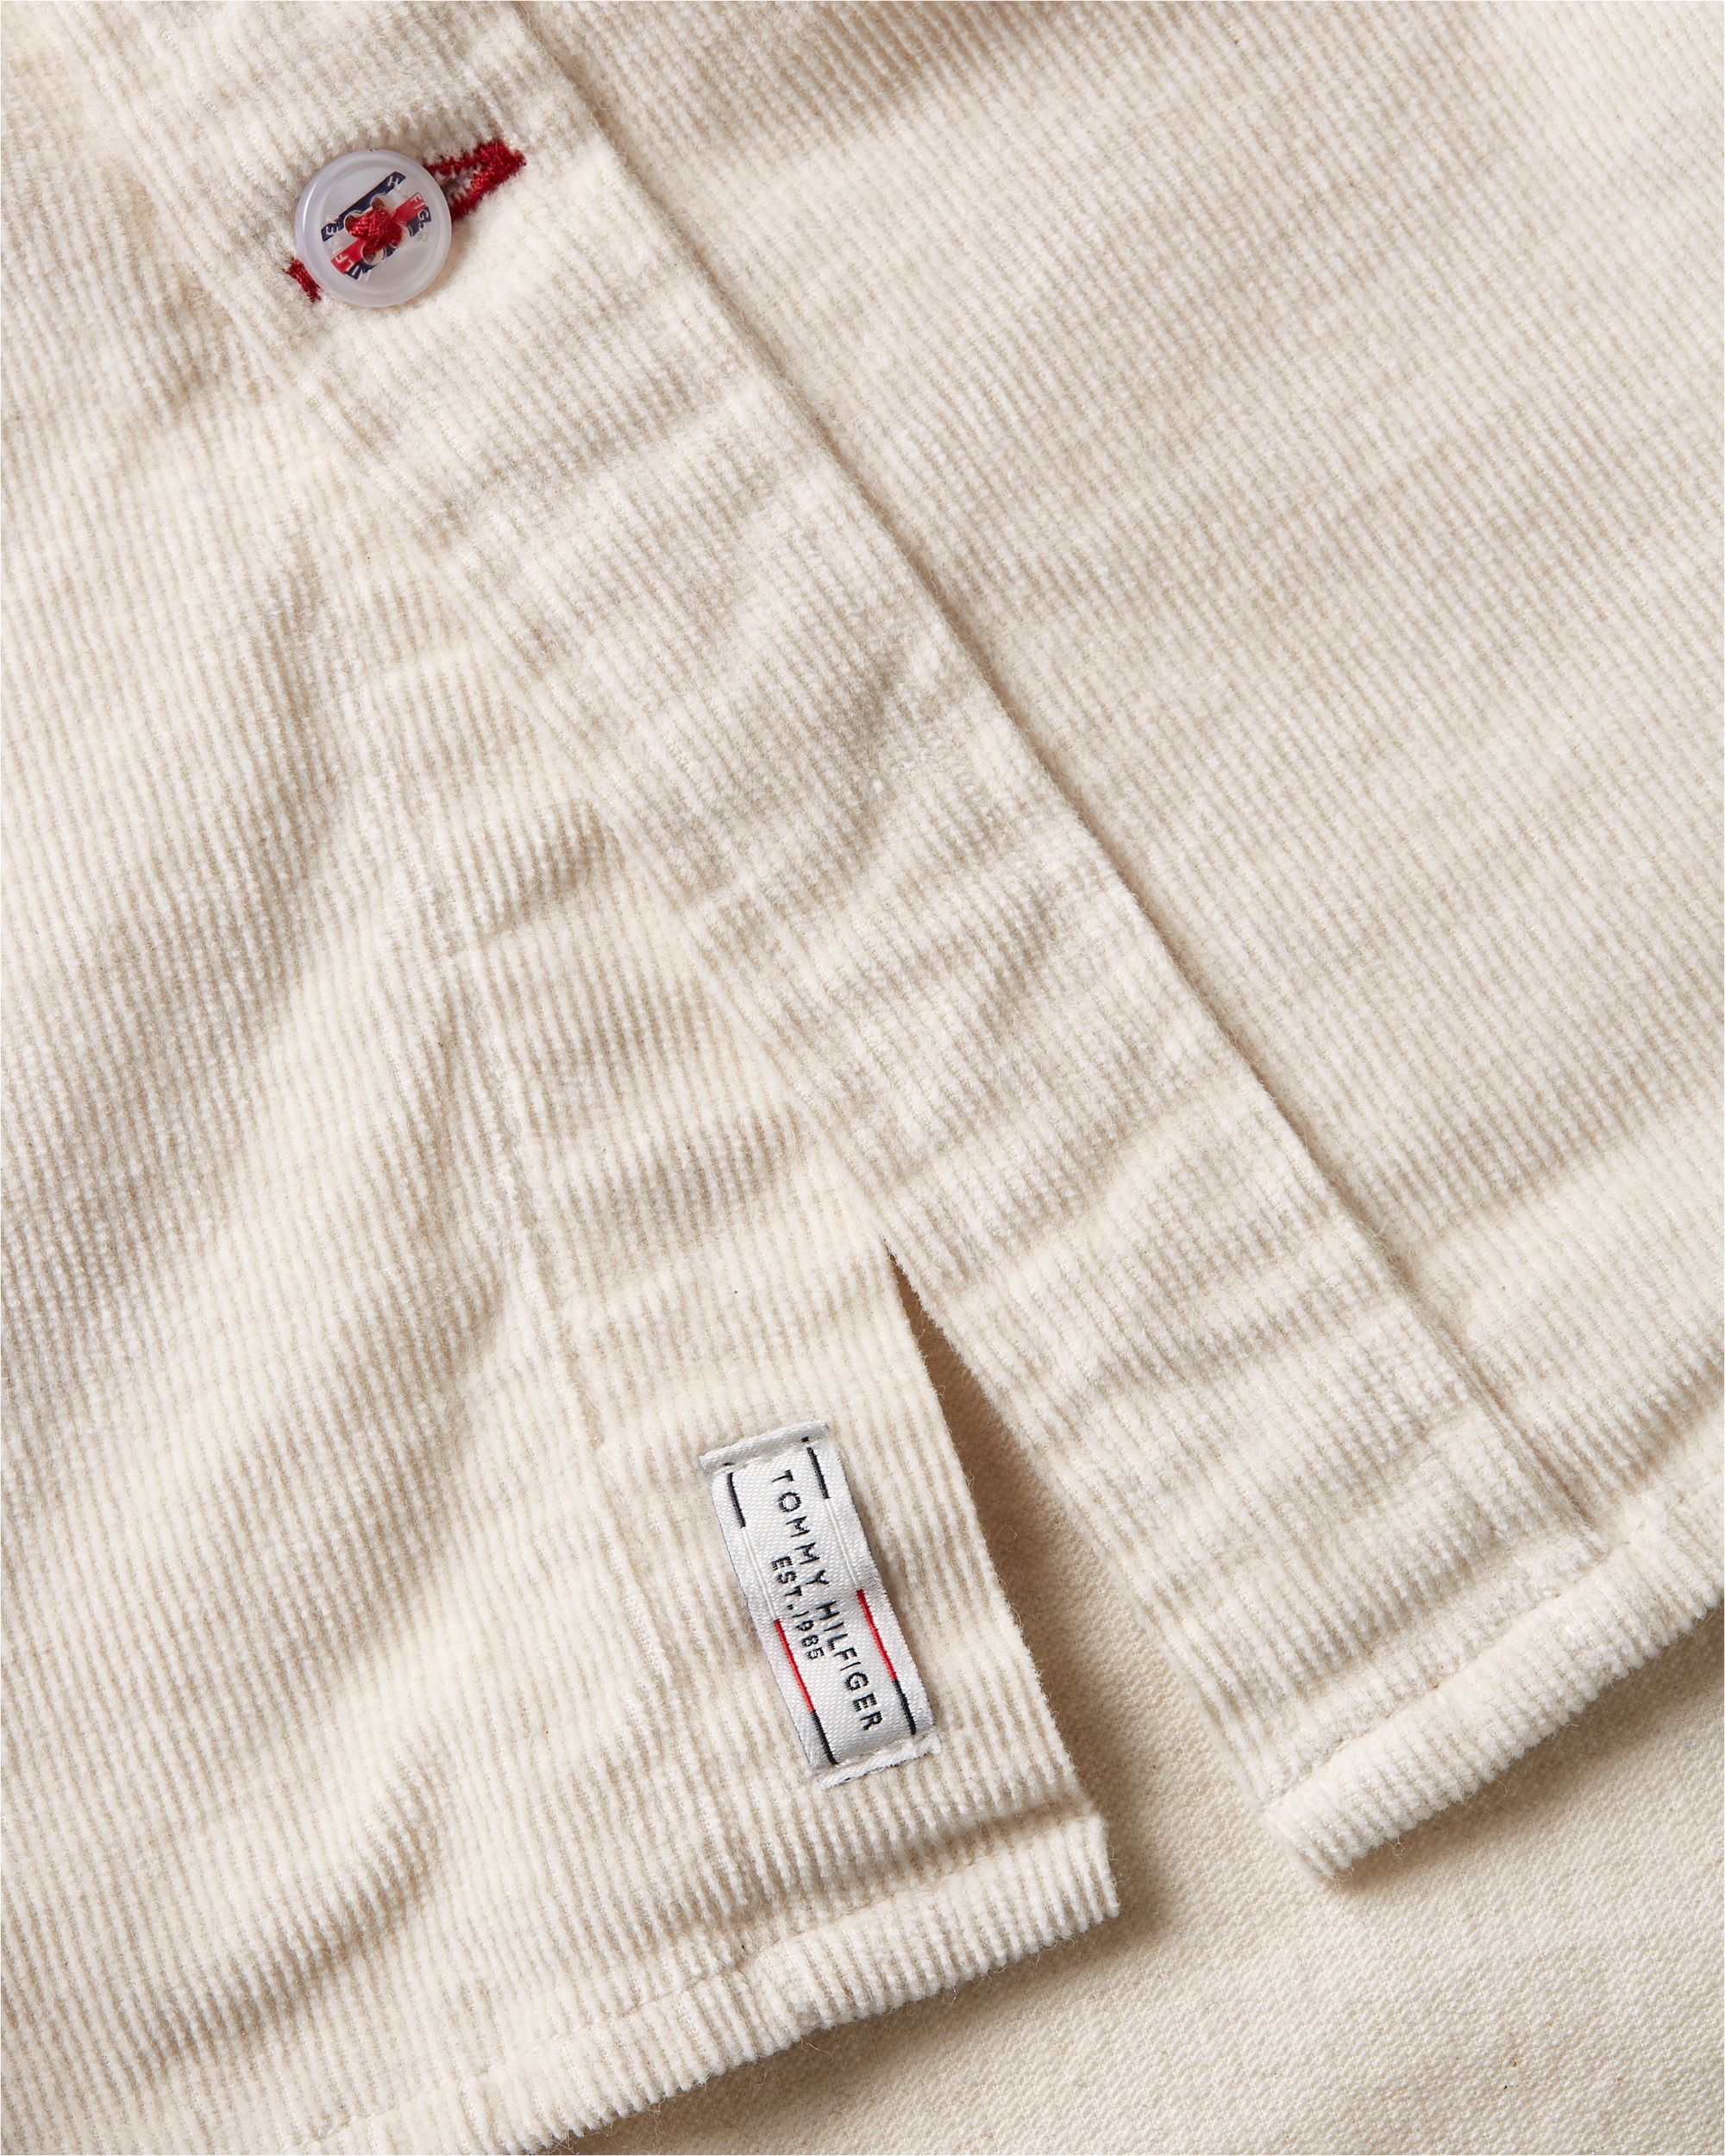 Tommy Hilfiger Menswear Overshirt Off white 083055-001-L